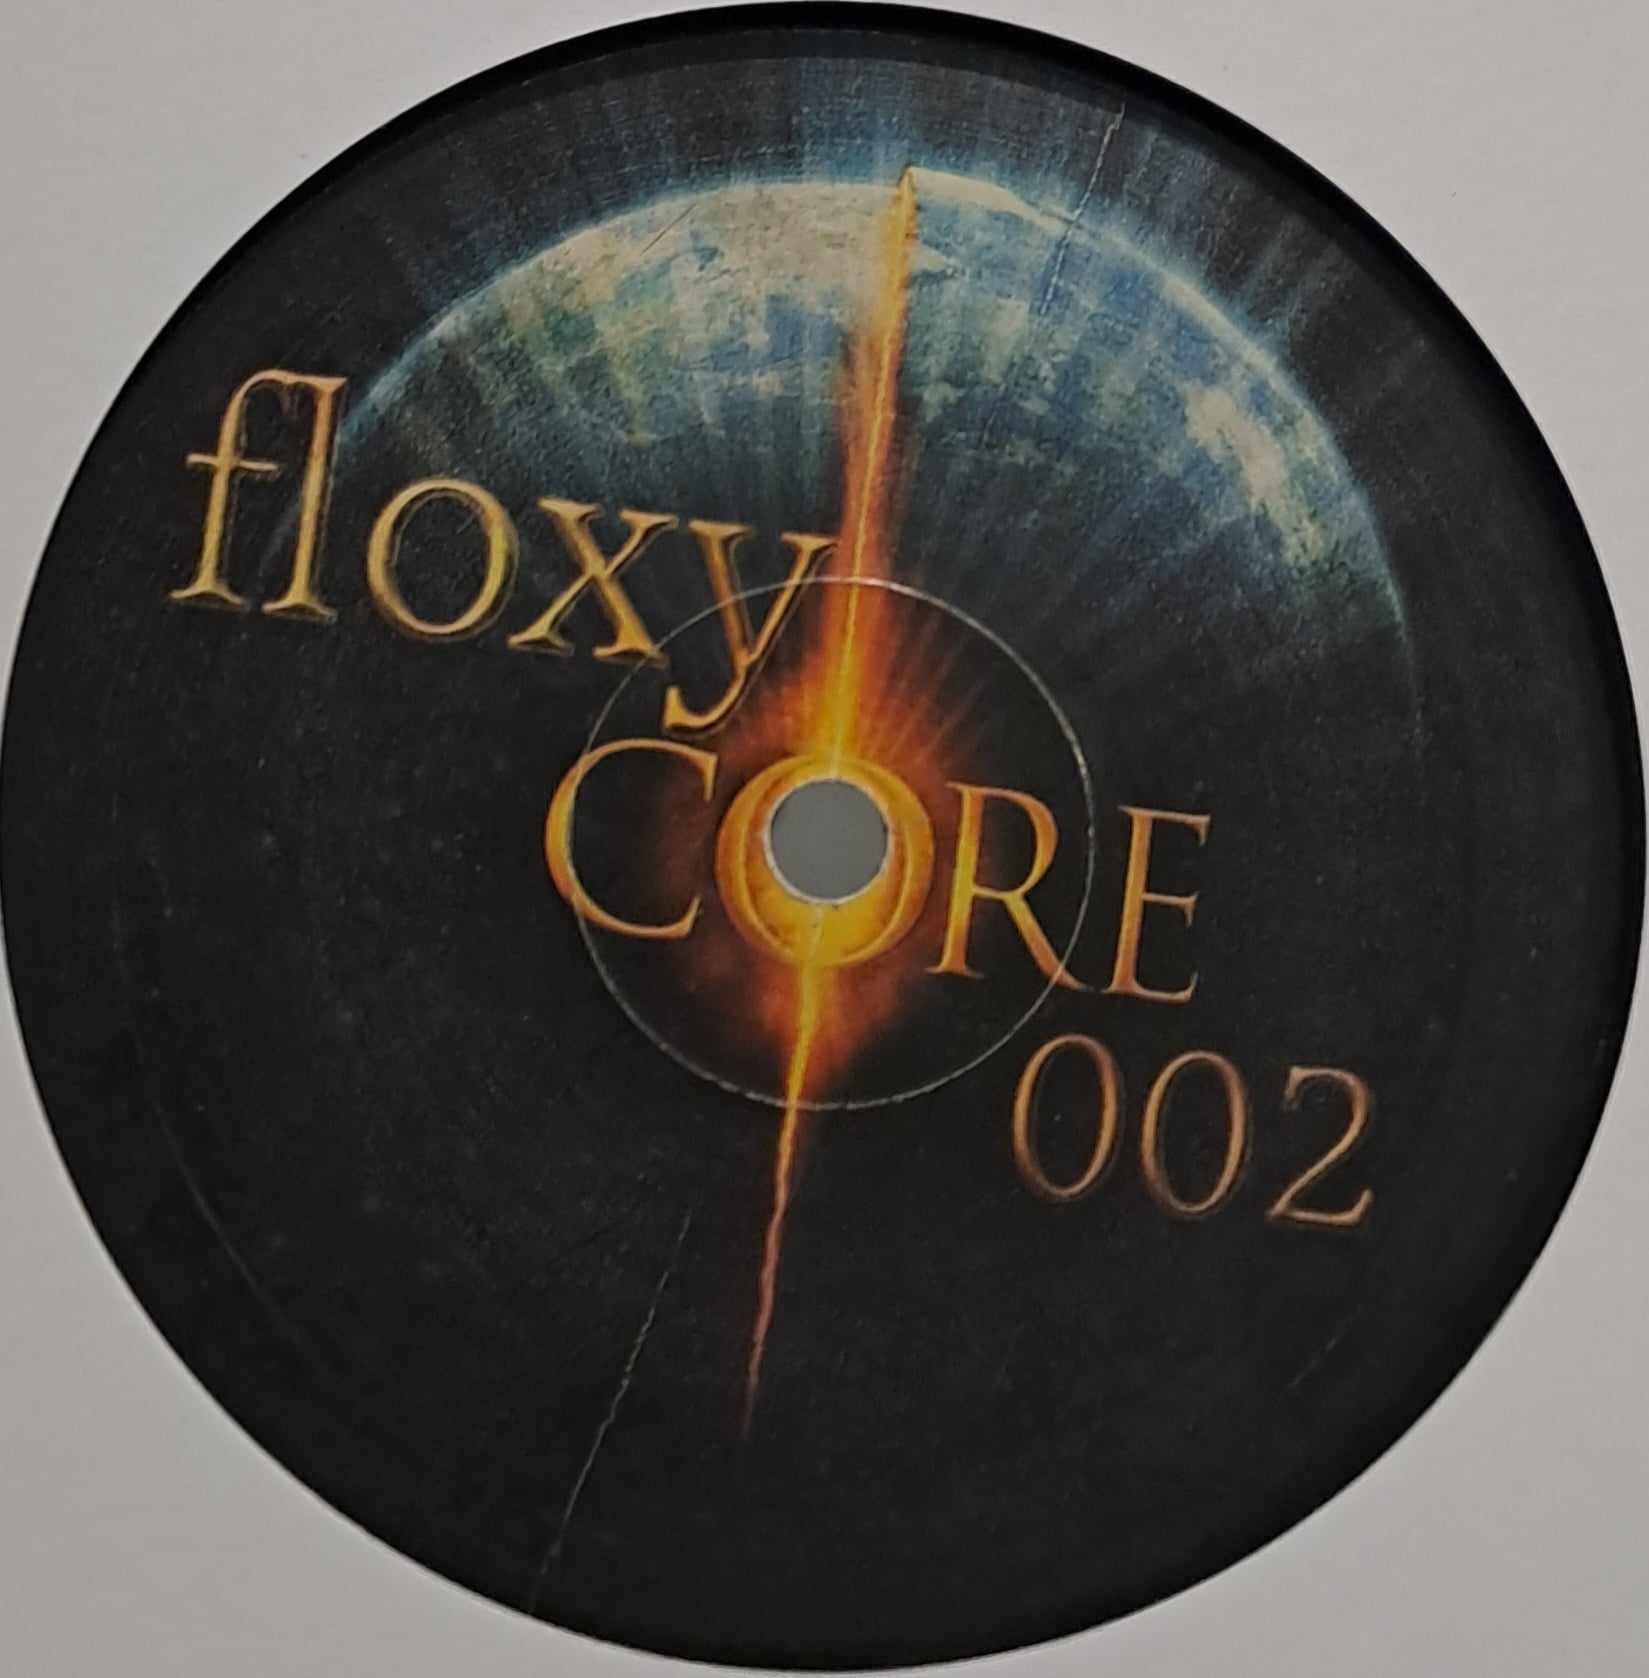 Floxycore 02 - vinyle freetekno